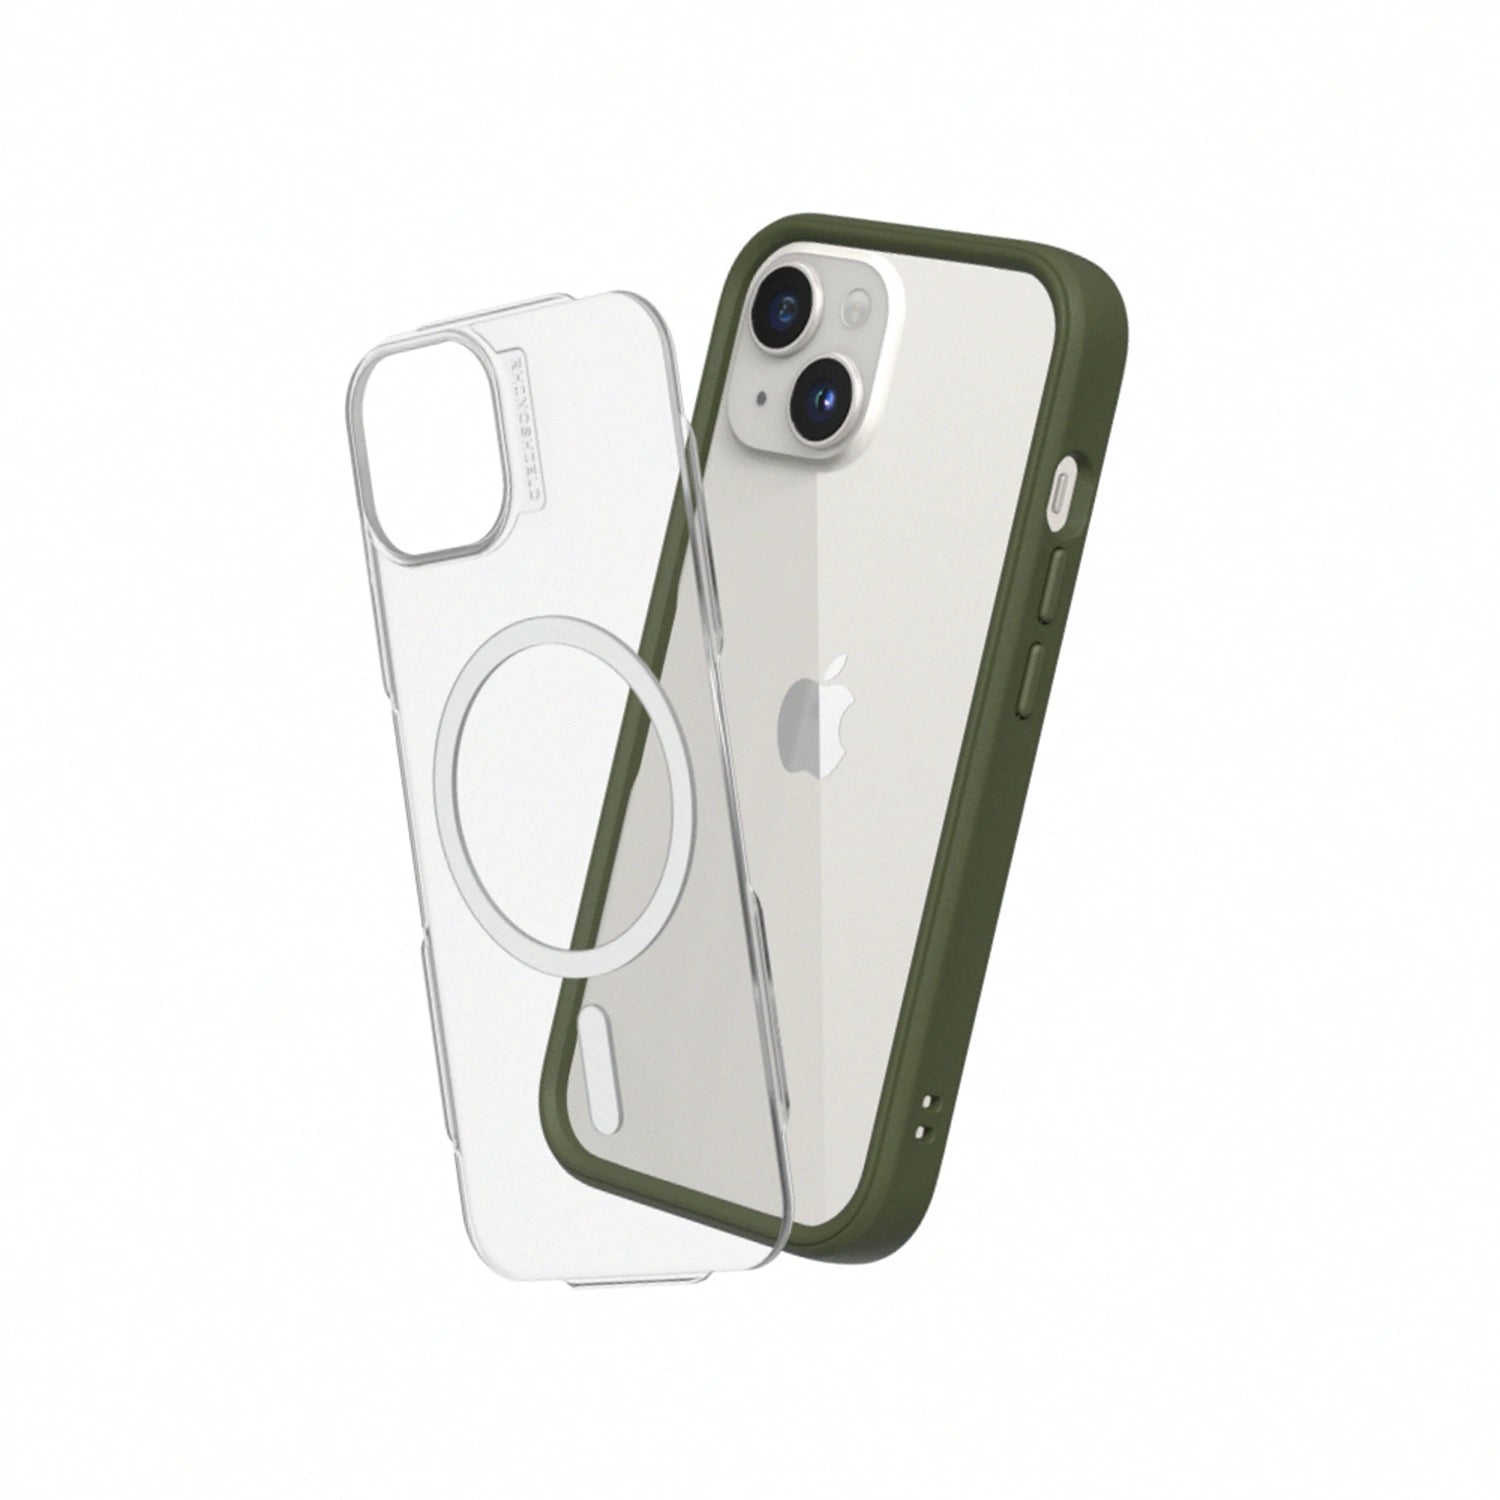 Best iPhone 11 Pro Max Cases - RhinoShield SolidSuit & Mod NX 